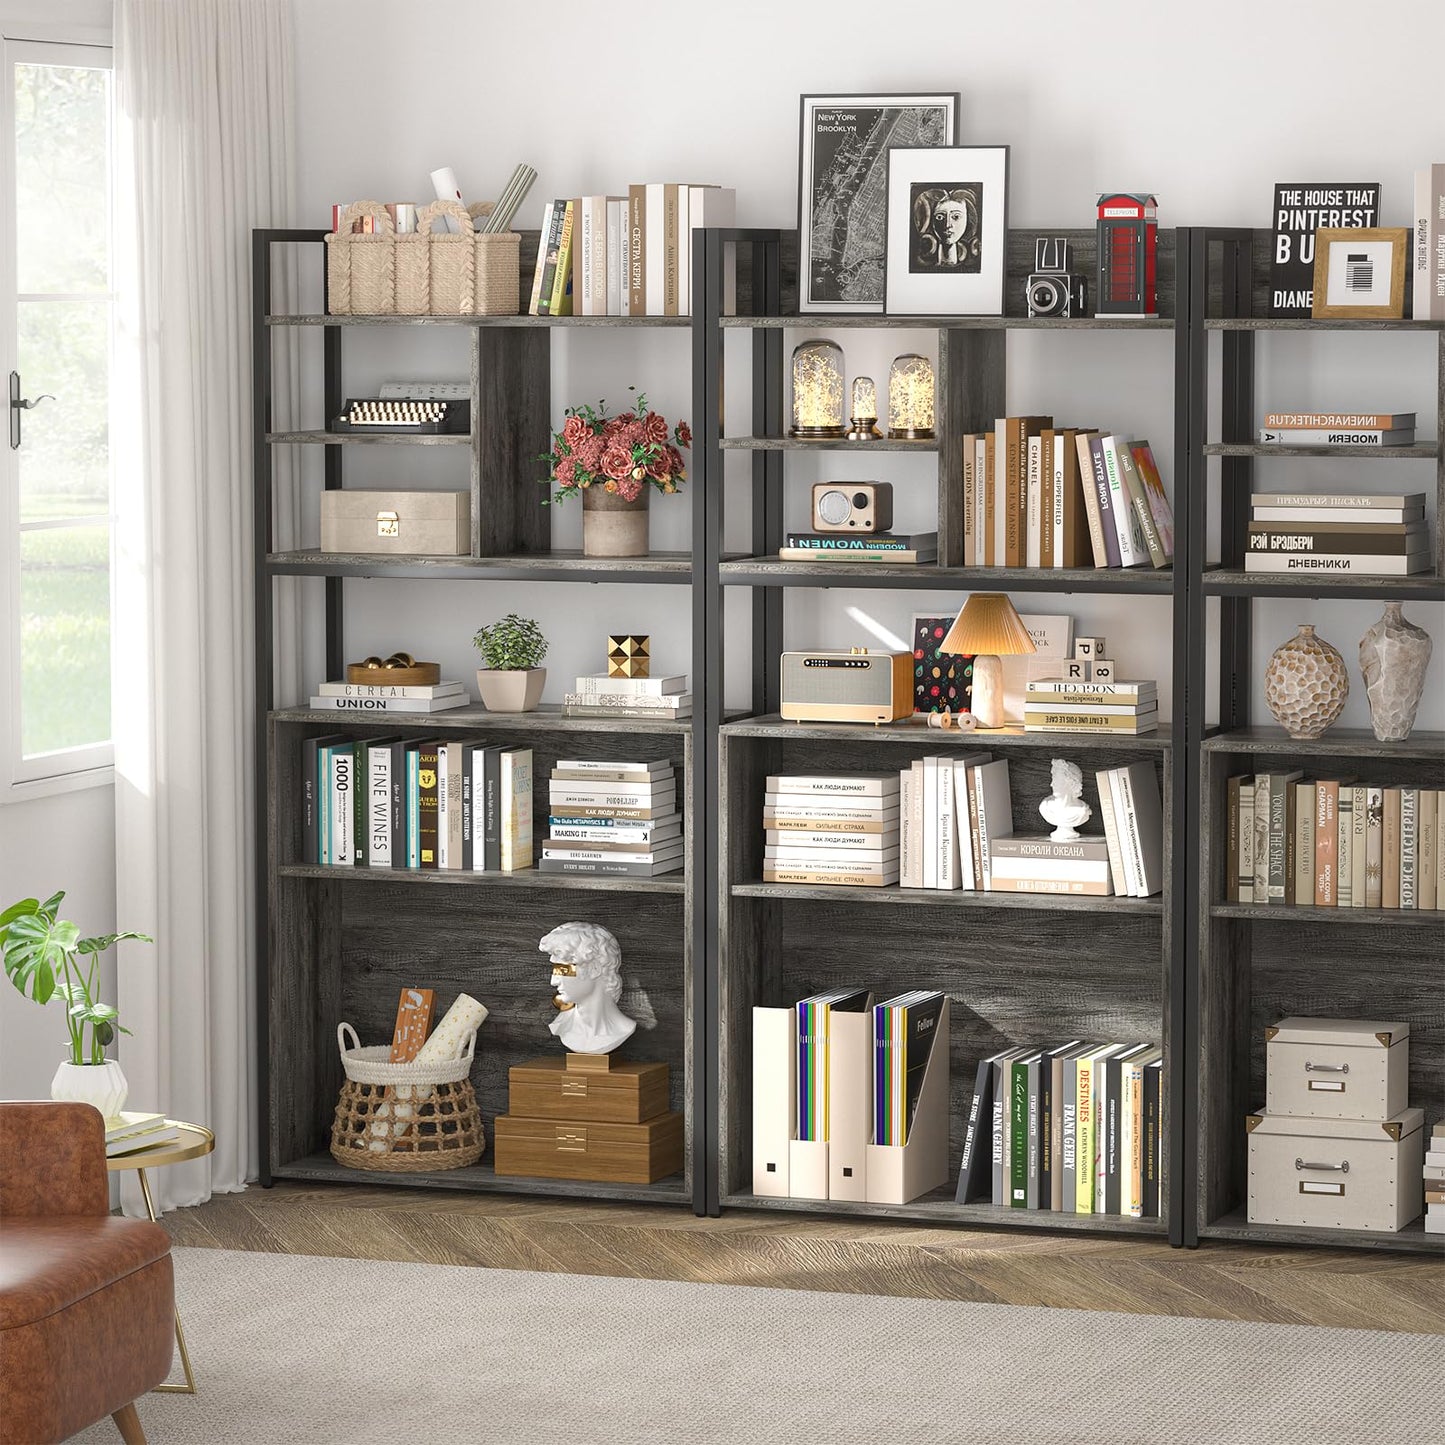 armocity Industrial Bookshelf, 6 Tier Tall Bookshelves Wood Metal Frame Standing Bookcase, Display Book Shelf with Adjustable Storage Shelves for Home Office, Living Room, Bed Room, Grey Oak